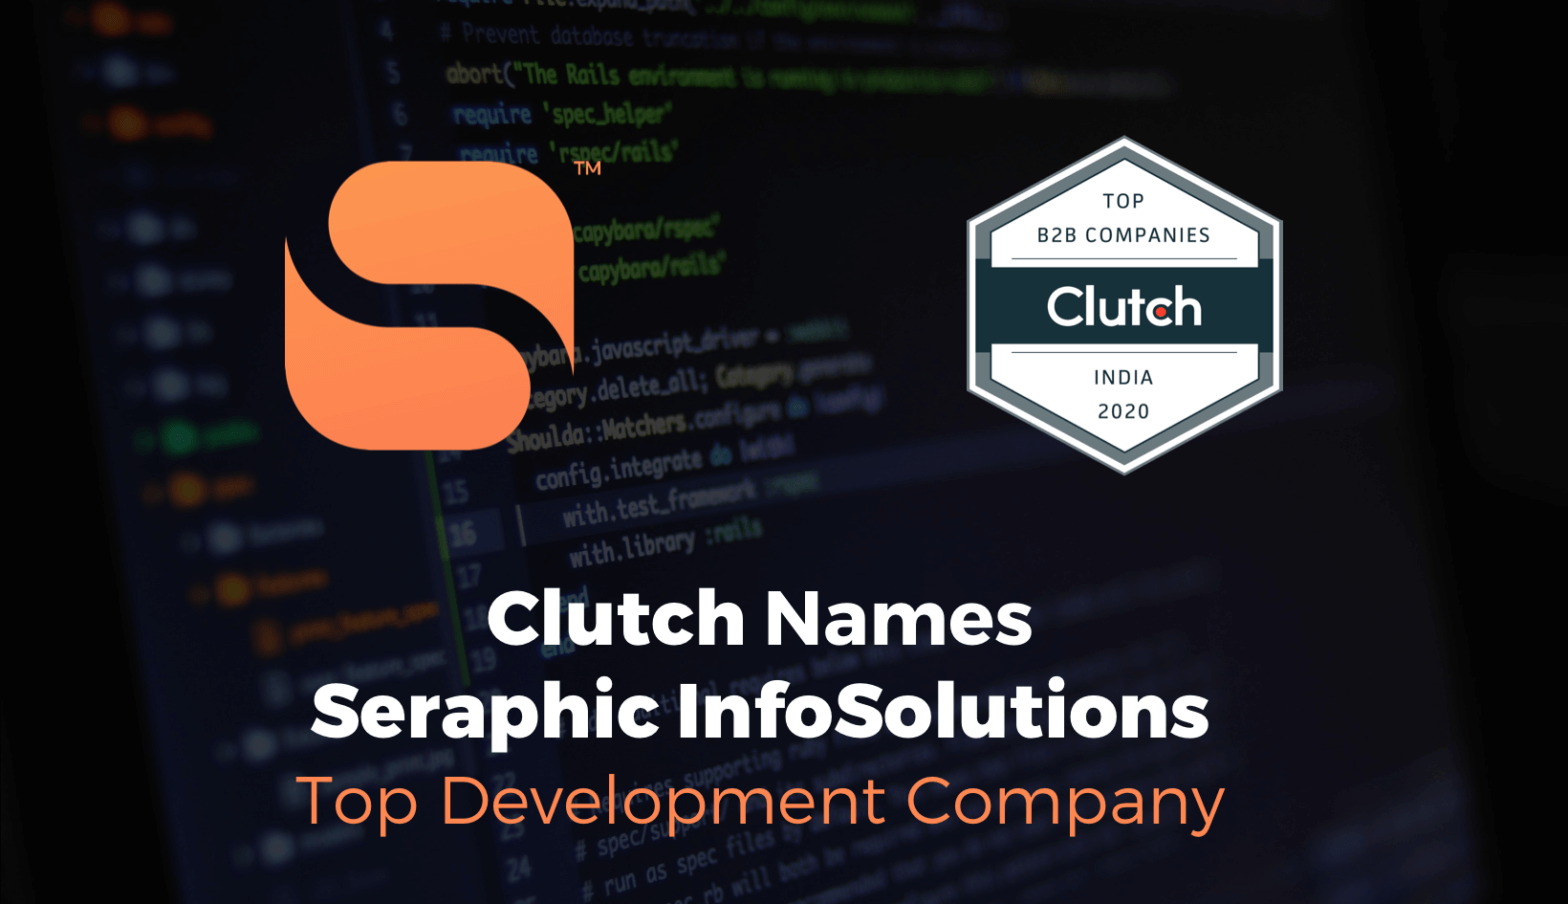 Clutch Names Seraphic InfoSolutions Top Development Company